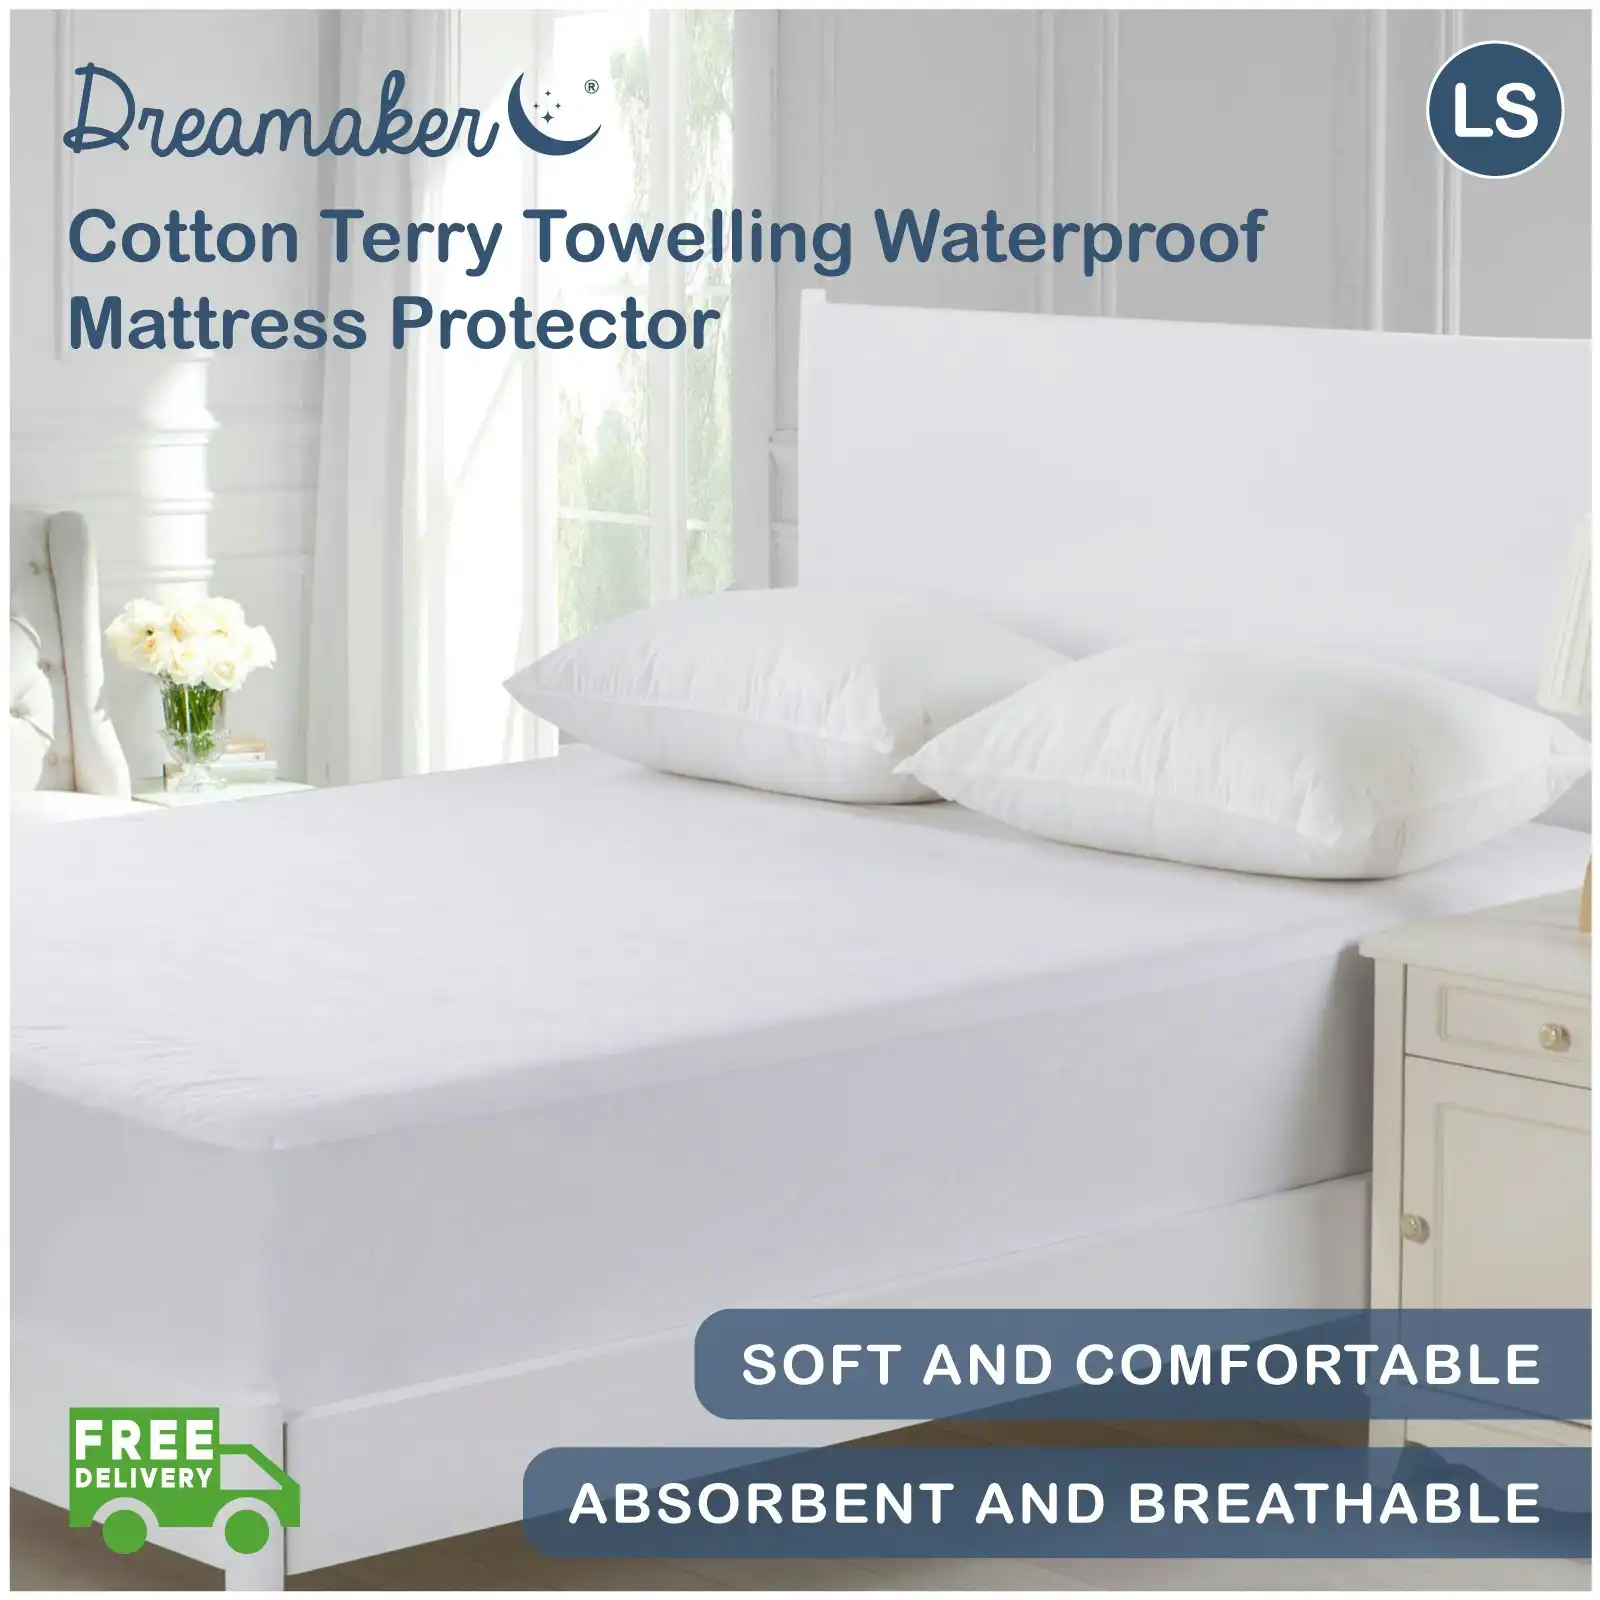 9009516 Dreamaker Cotton Terry Towelling Waterproof Mattress Protector LSB